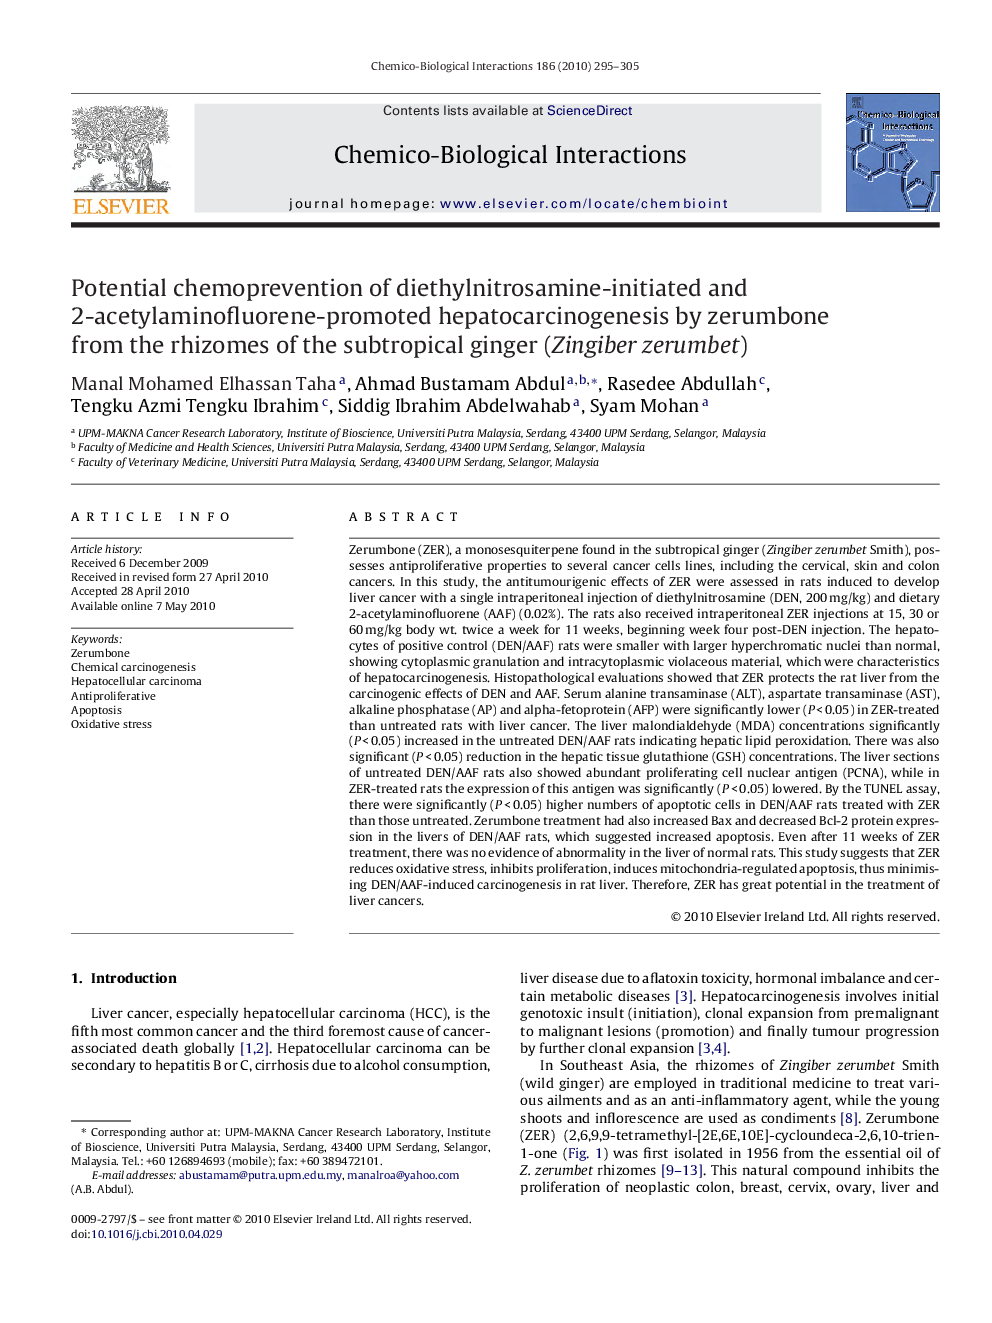 Potential chemoprevention of diethylnitrosamine-initiated and 2-acetylaminofluorene-promoted hepatocarcinogenesis by zerumbone from the rhizomes of the subtropical ginger (Zingiber zerumbet)